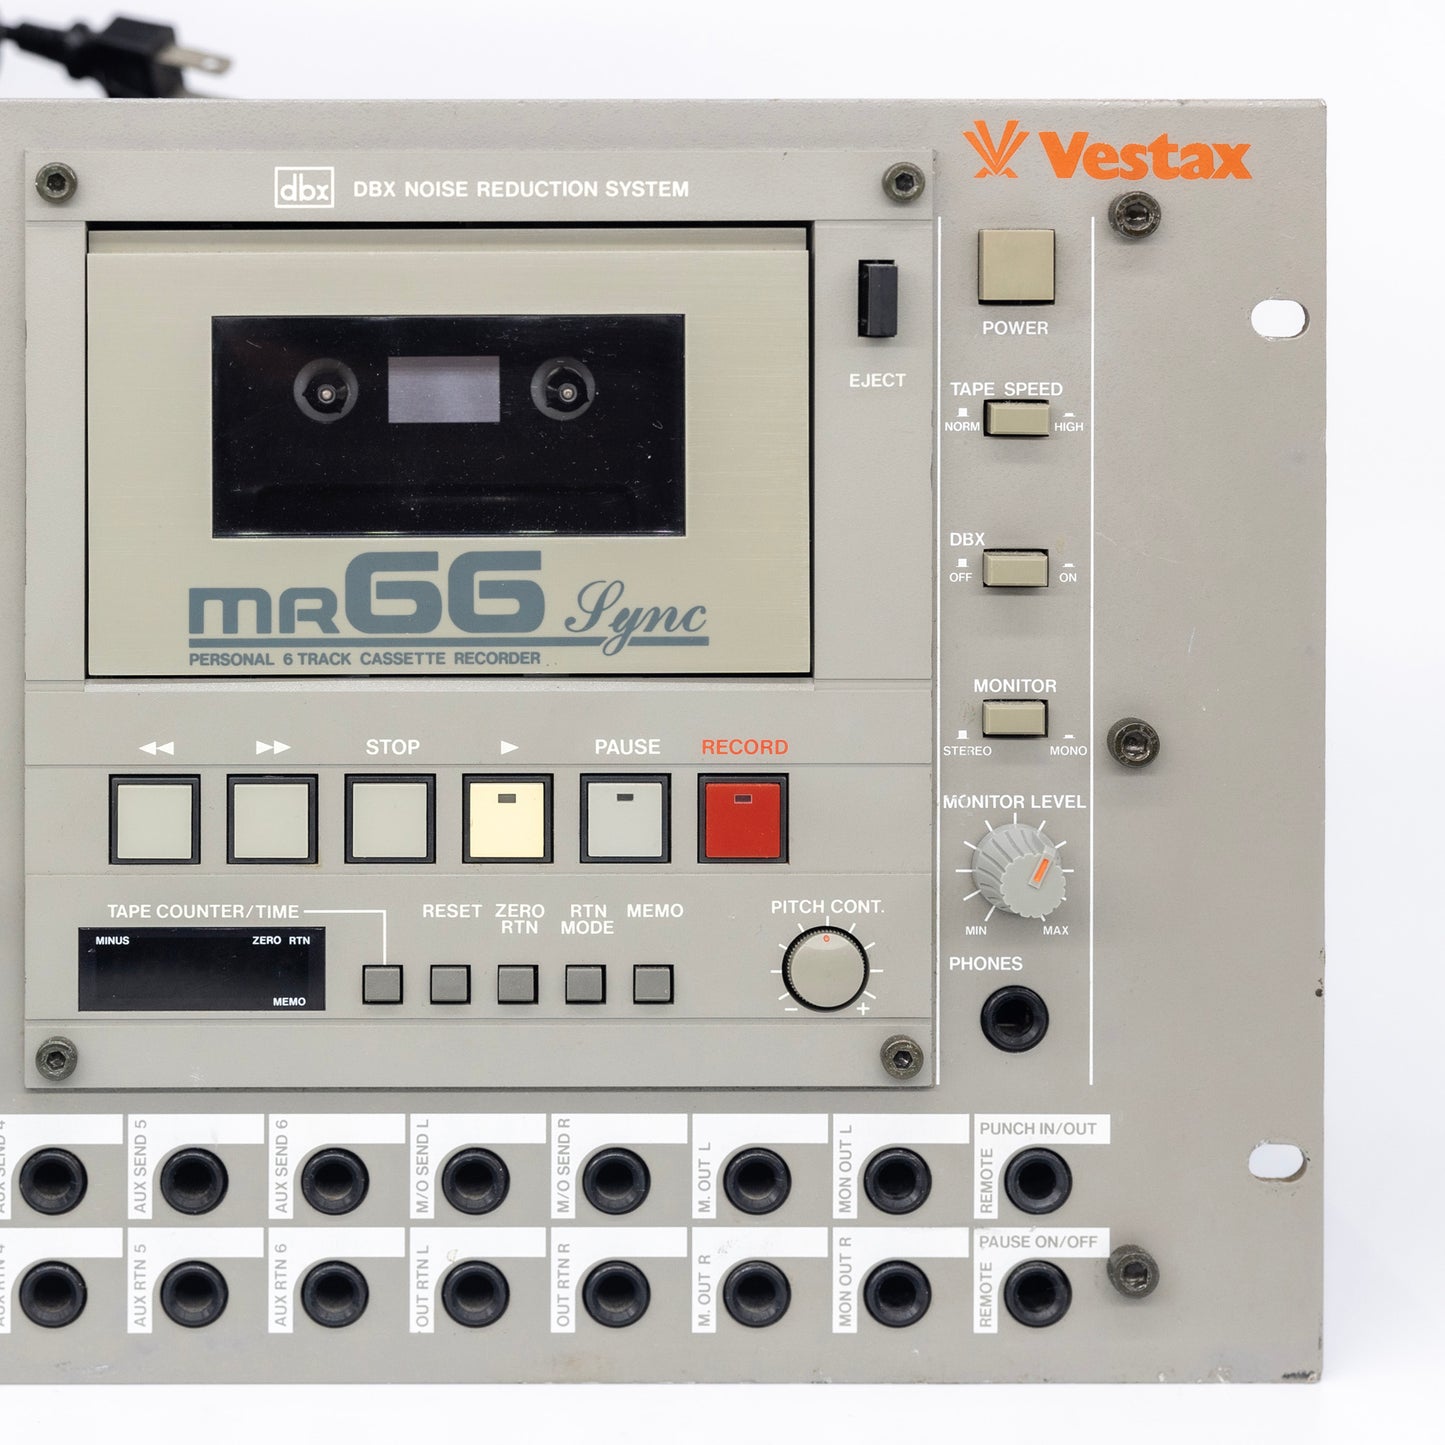 Vestax MR66 Sync 6-Track